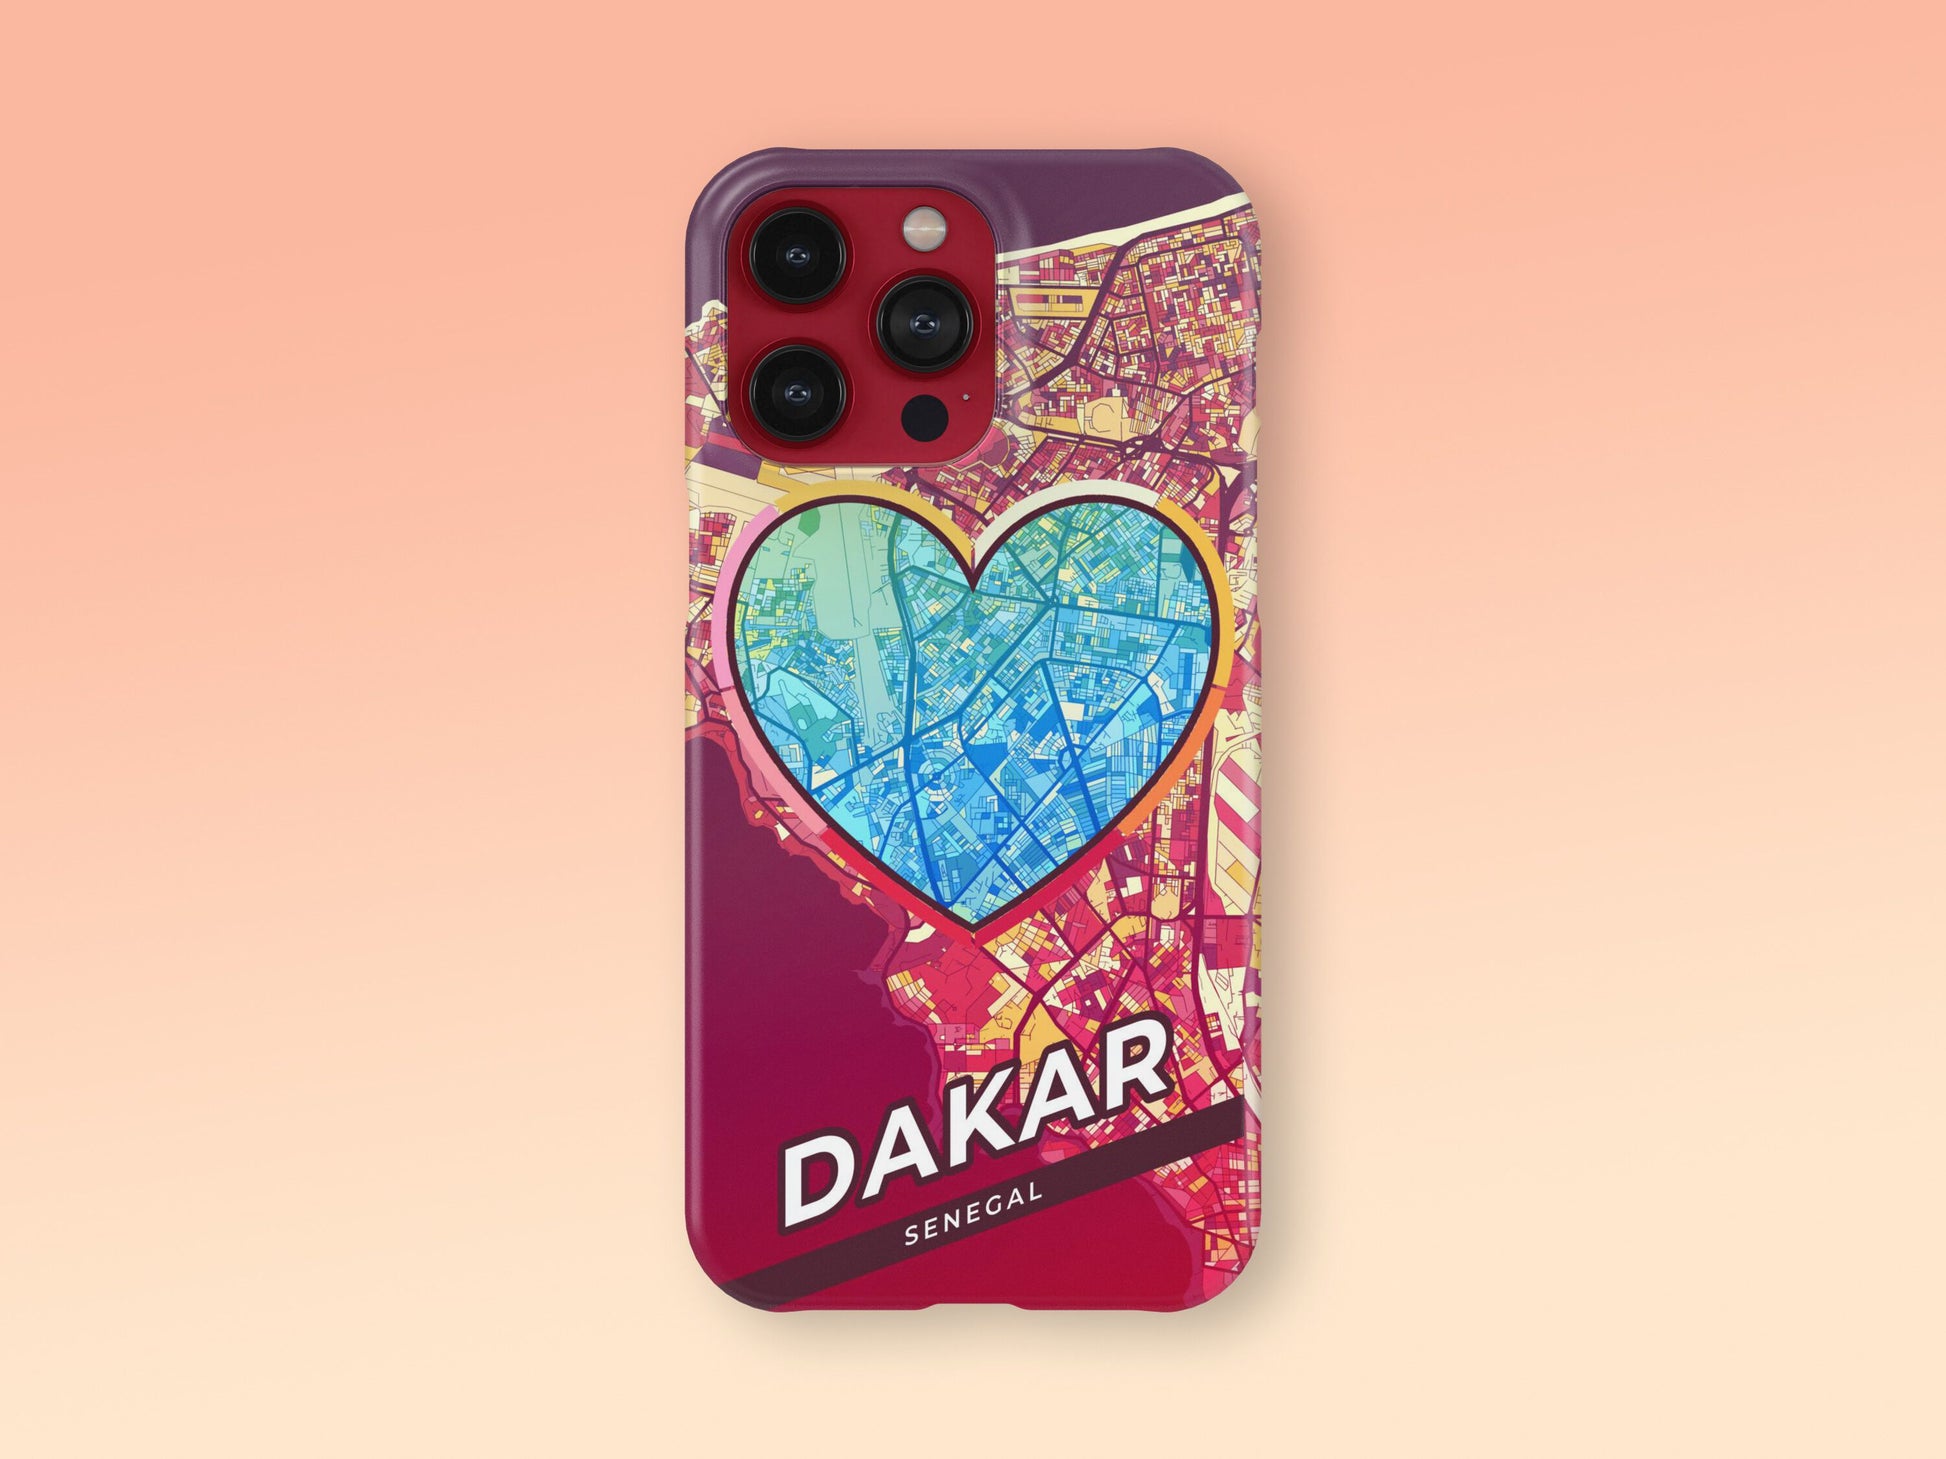 Dakar Senegal slim phone case with colorful icon. Birthday, wedding or housewarming gift. Couple match cases. 2